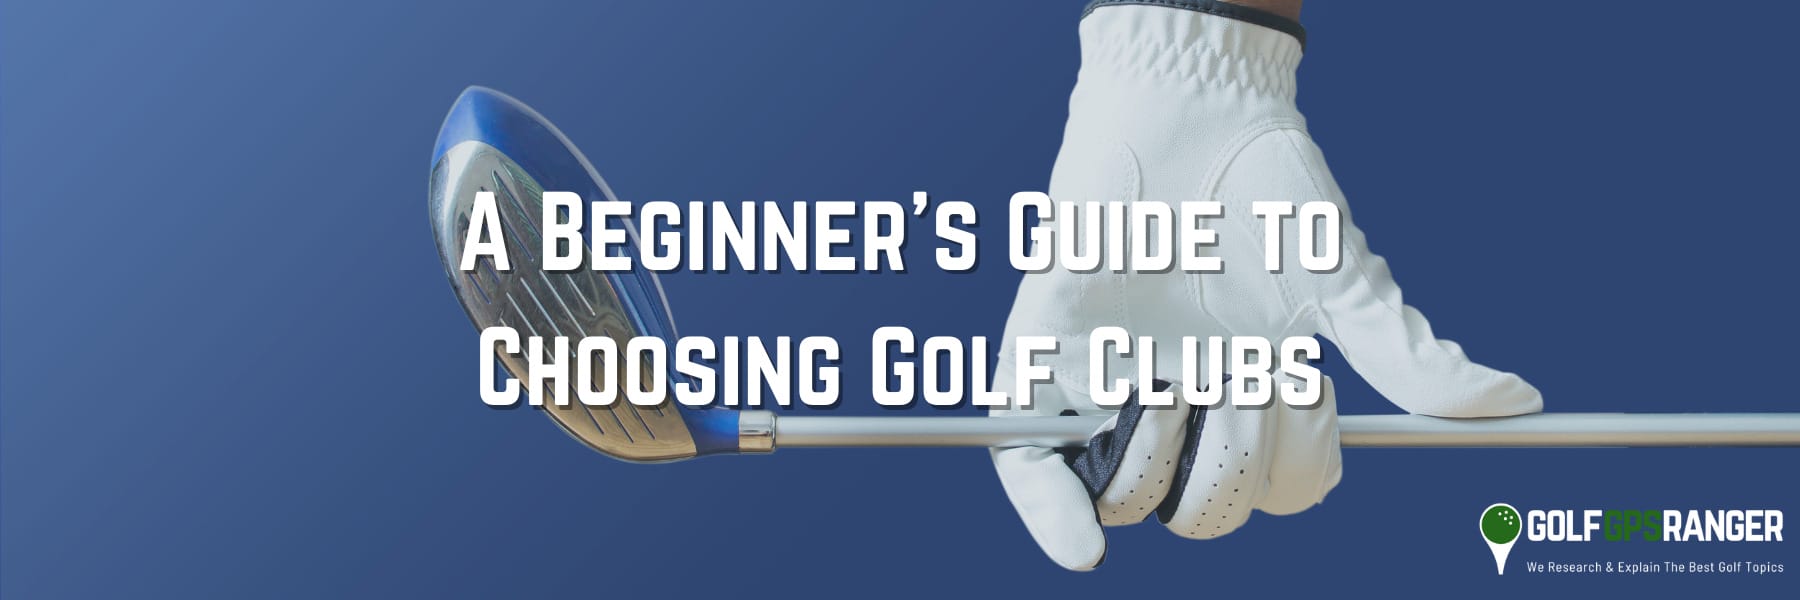 A Beginner's Guide to Choosing Golf Clubs